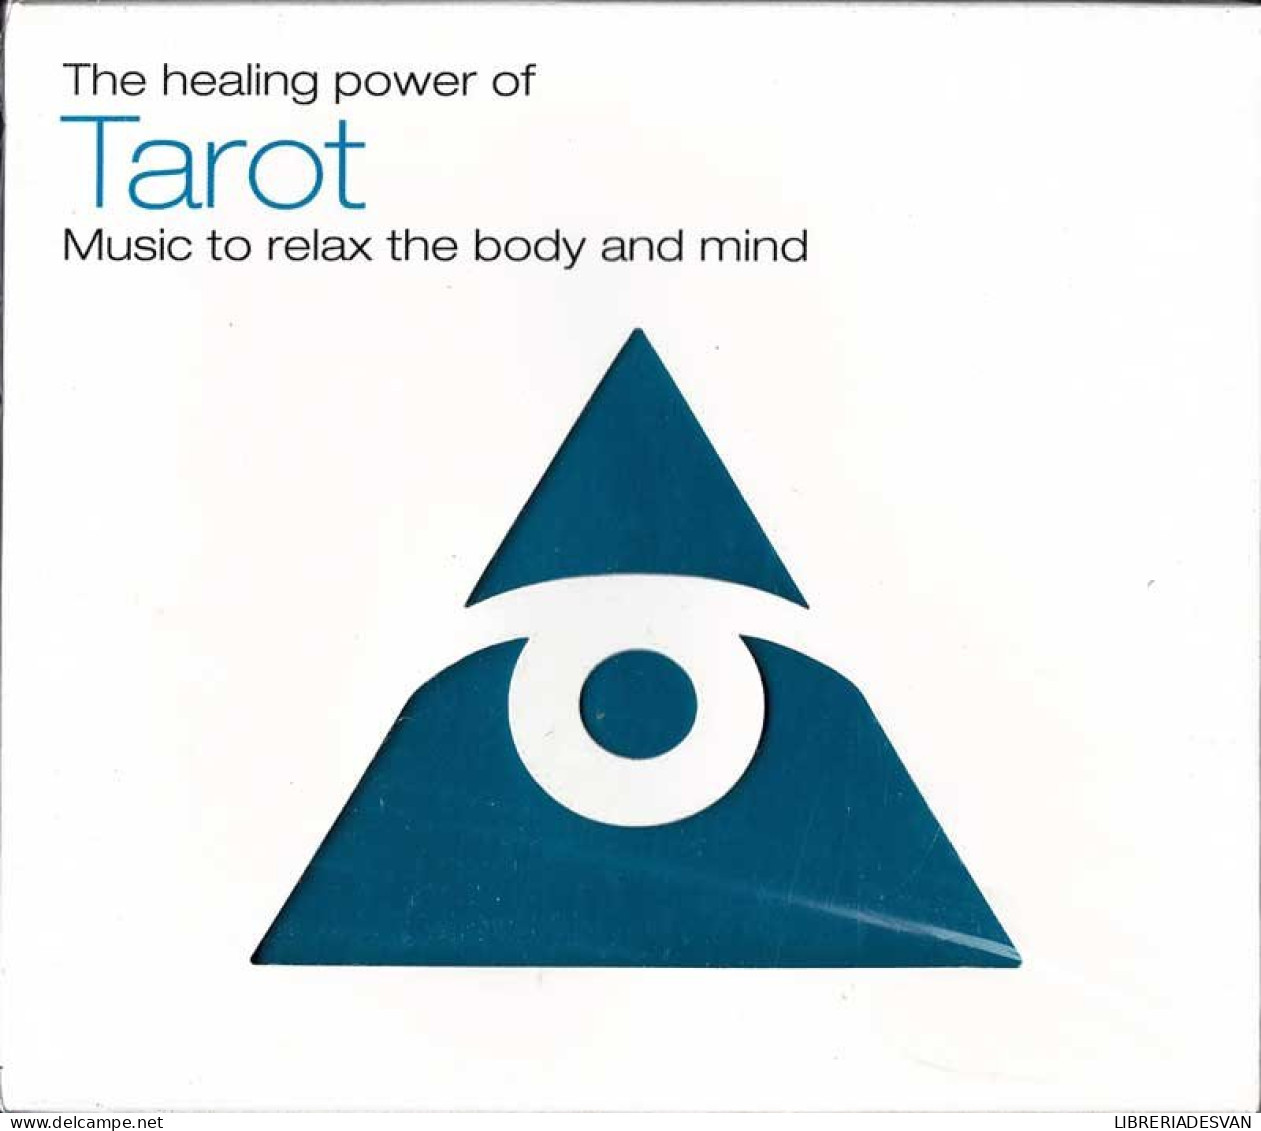 Levantis - The Healing Power Of Tarot. CD - Dance, Techno En House